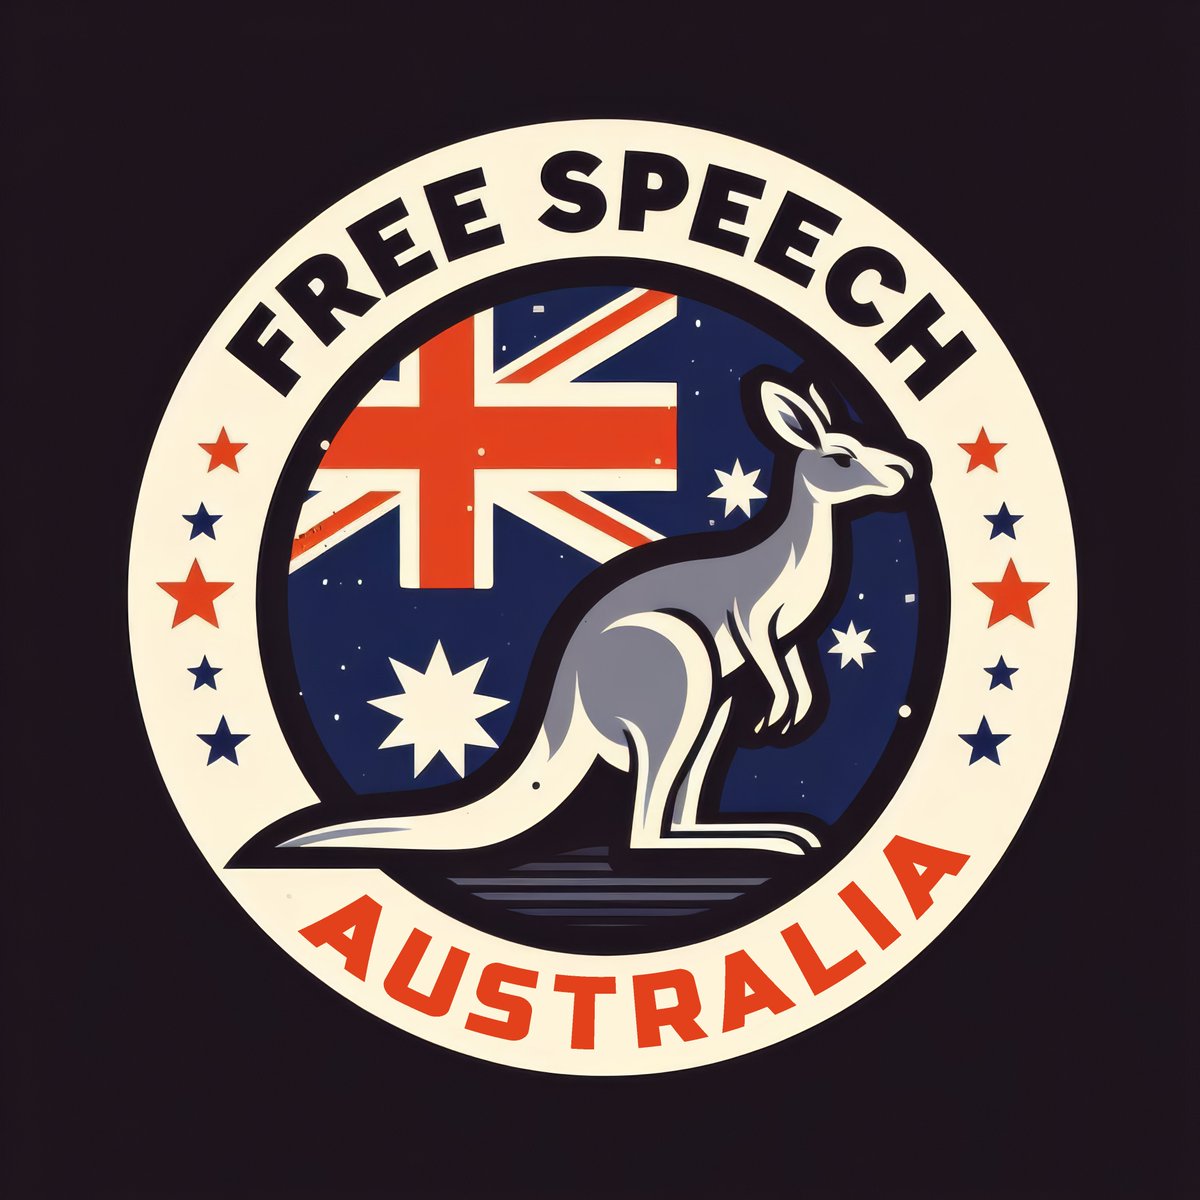 Free Speech is Human Right!